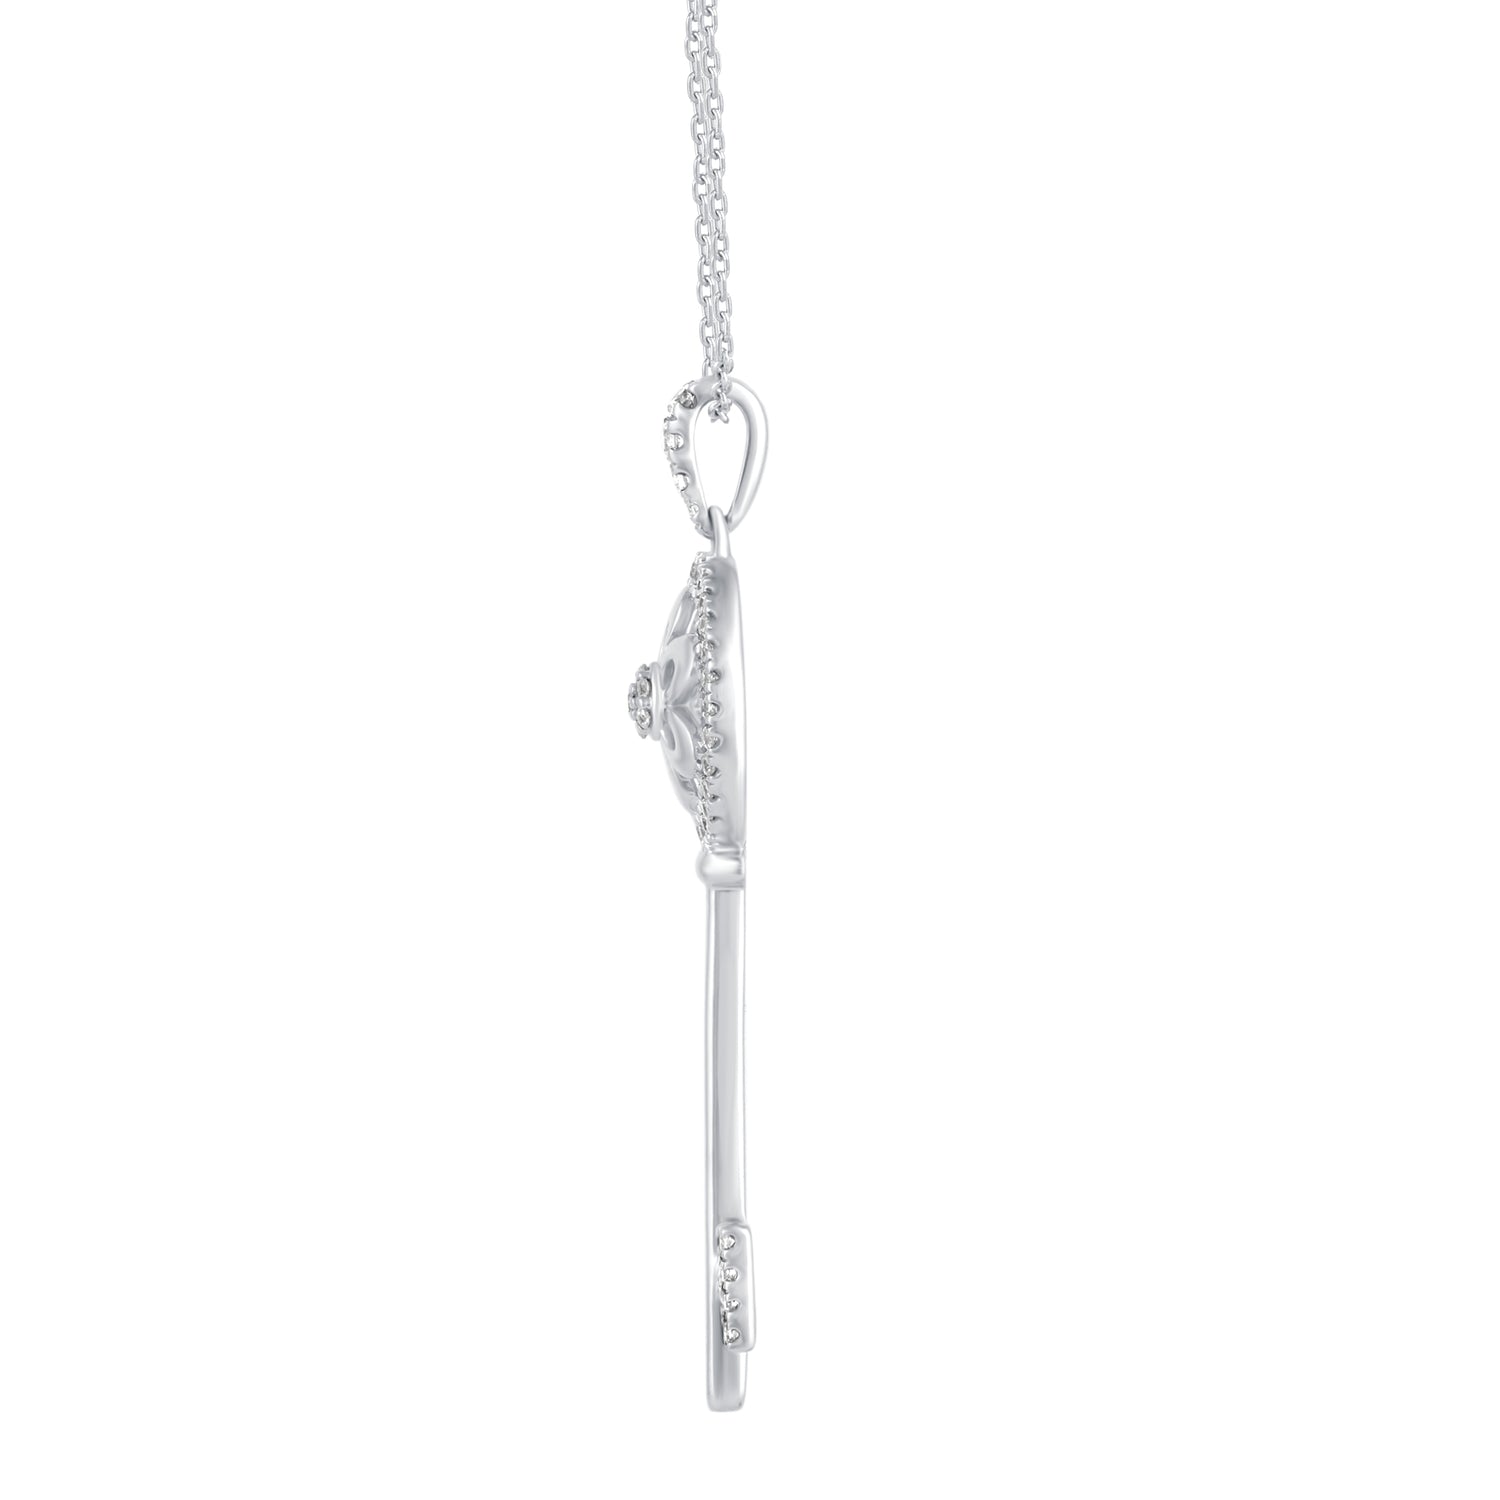 1/5 Cttw Diamond Daisy Flower Key Pendant Necklace set in 925 Sterling Silver